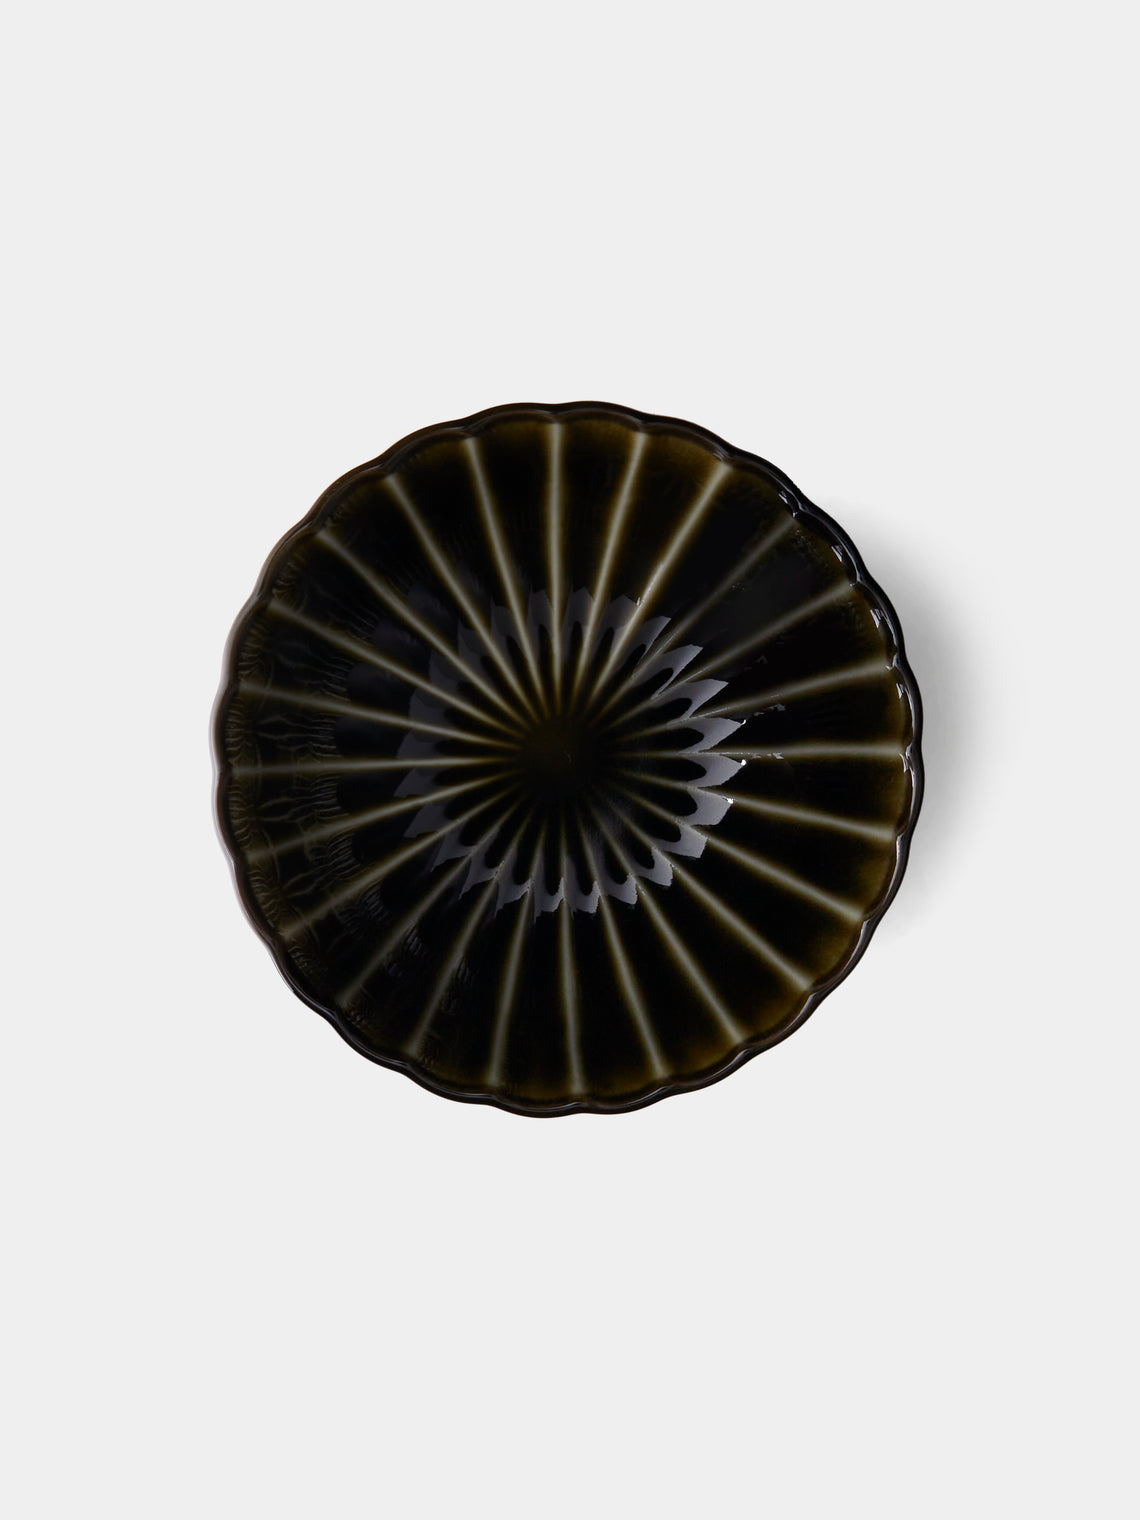 Kaneko Kohyo - Giyaman Urushi Ceramic Shallow Bowls (Set of 4) -  - ABASK